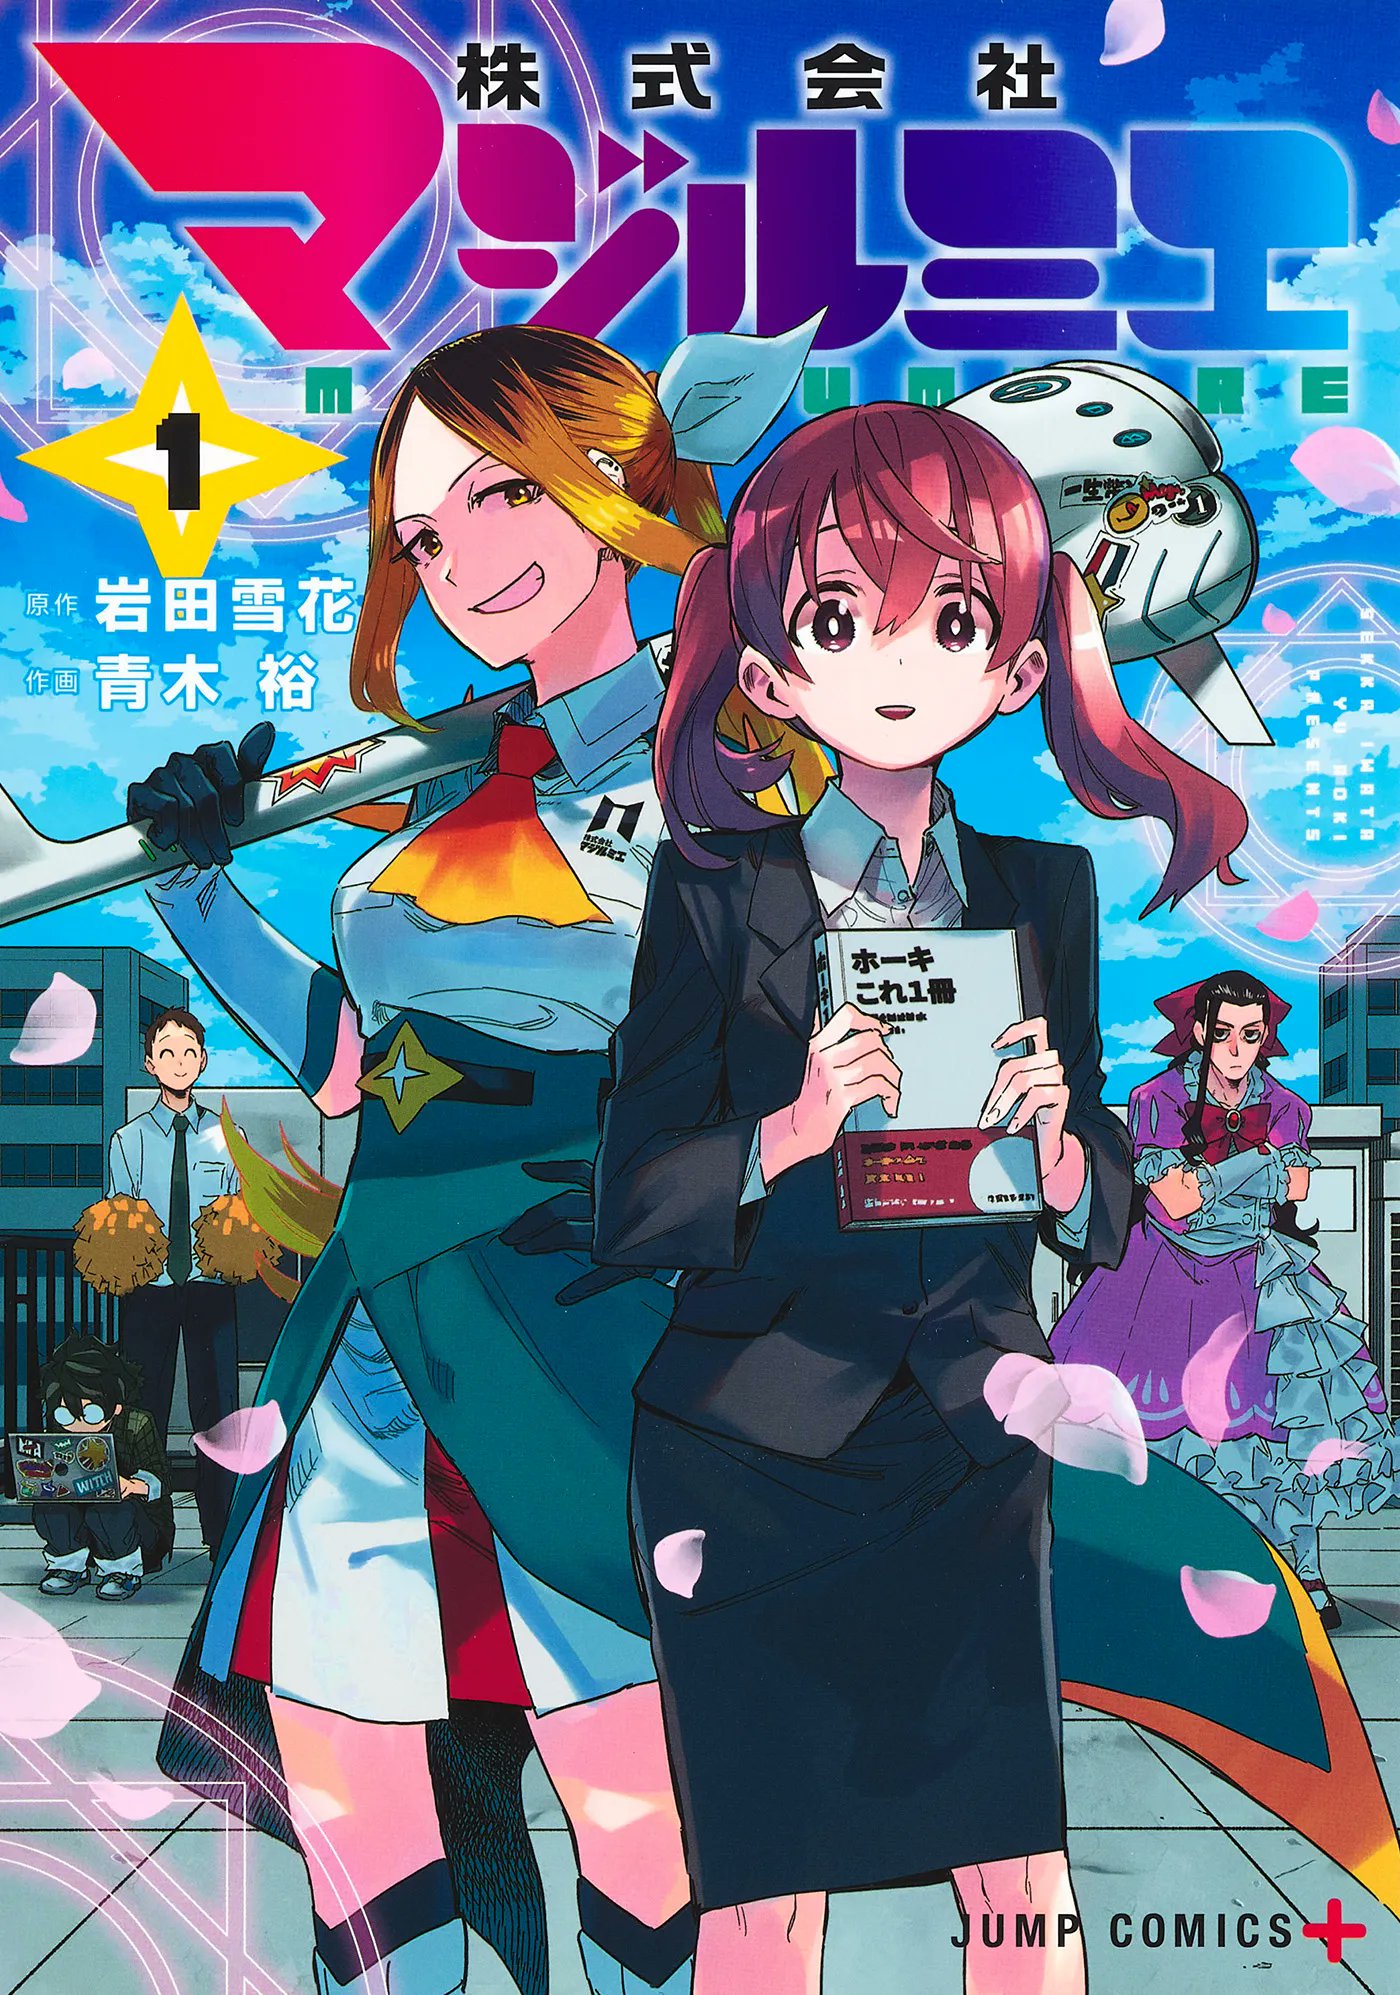 Magilumiere Magical Girls Inc. by Sekka Iwata (Story) & Yu Aoki (Art)